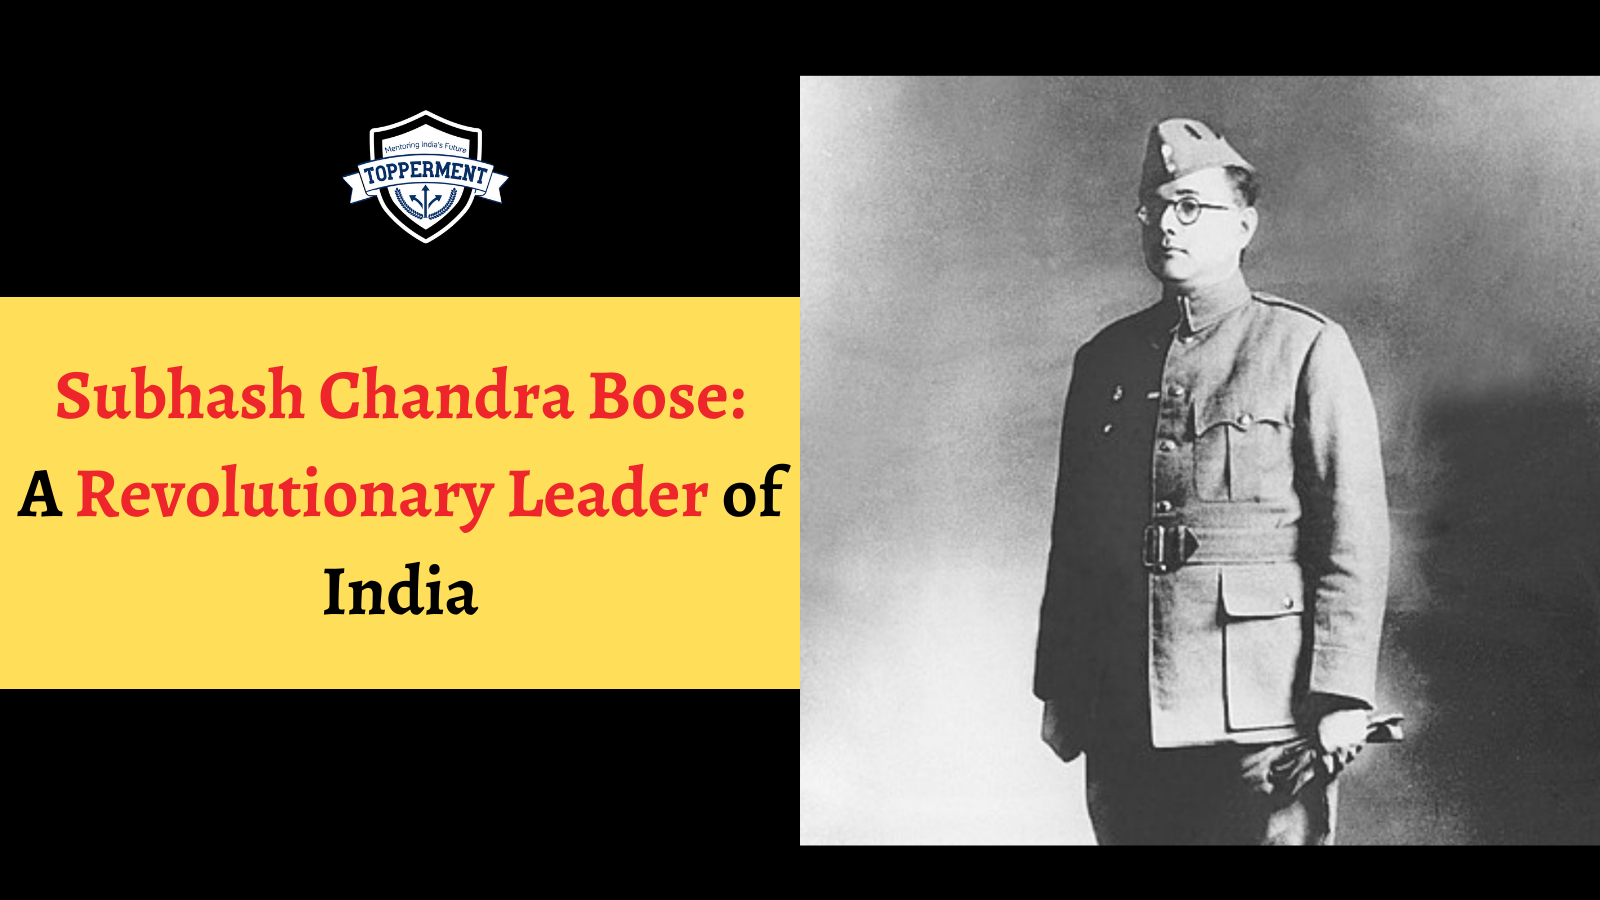 Subhash Chandra Bose: A Revolutionary Leader of India